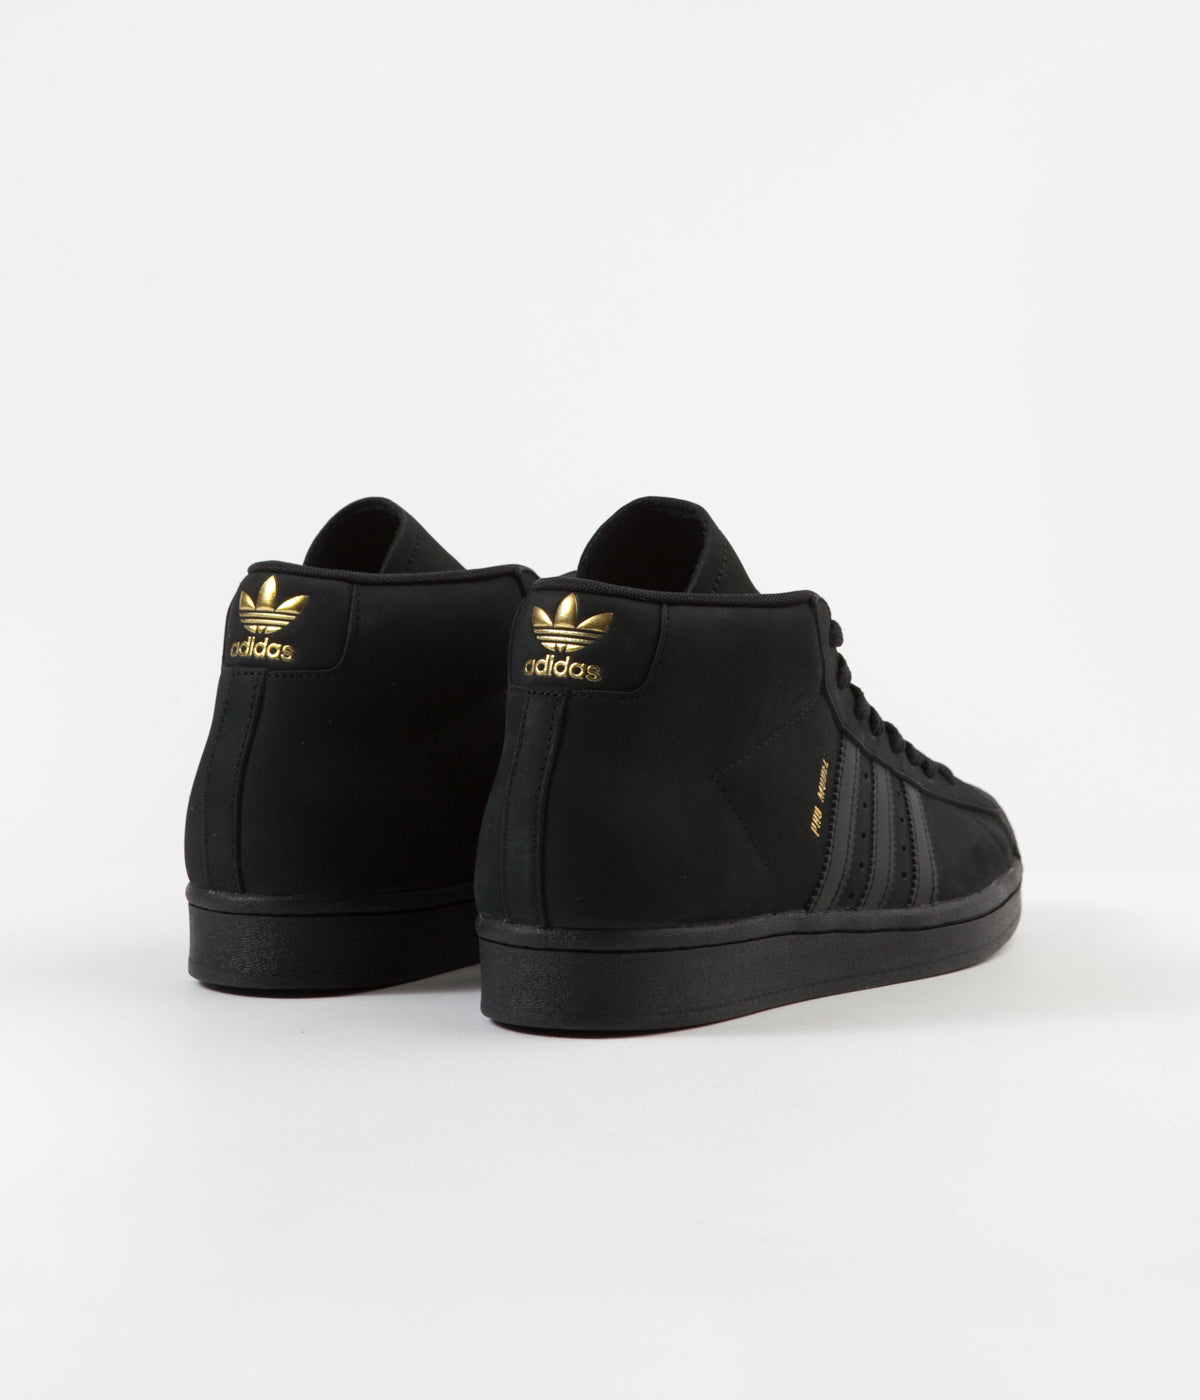 Buy Adidas Men's Cg5073 Pro Model Sneaker Us at Amazon.in